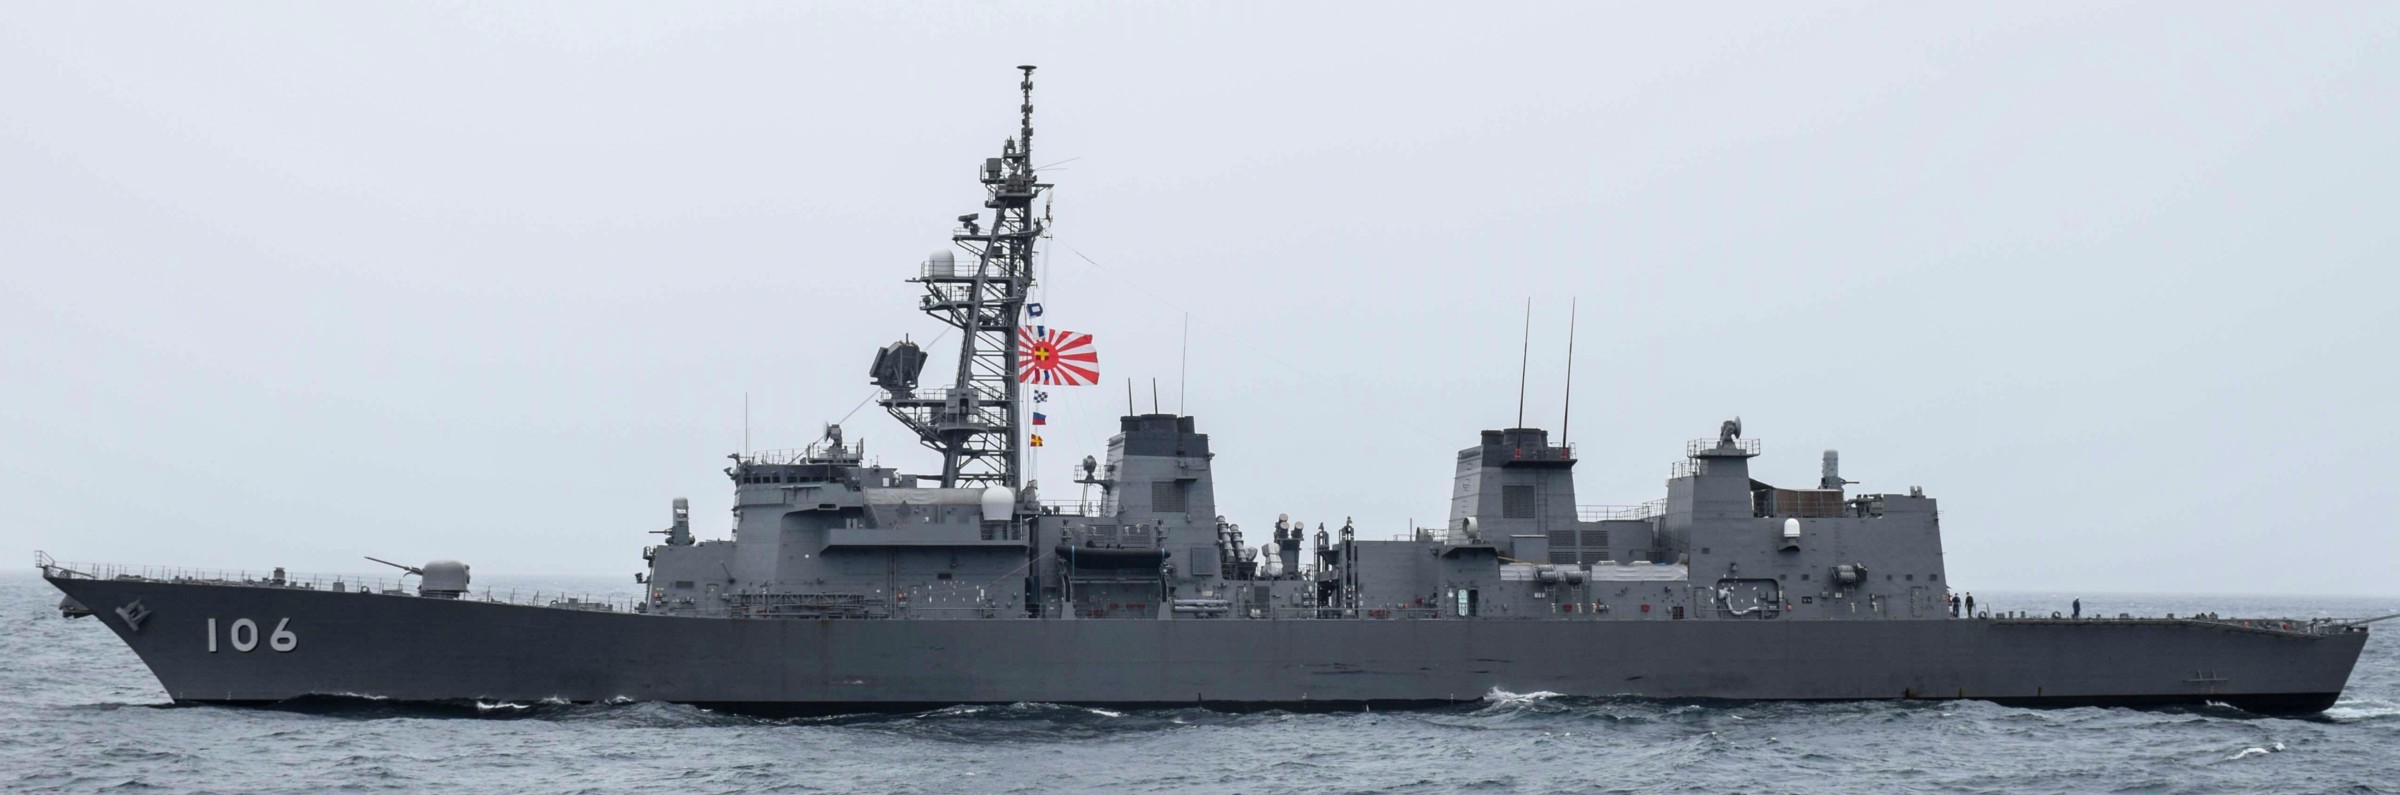 dd-106 js samidare murasame class destroyer japan maritime self defense force jmsdf 36